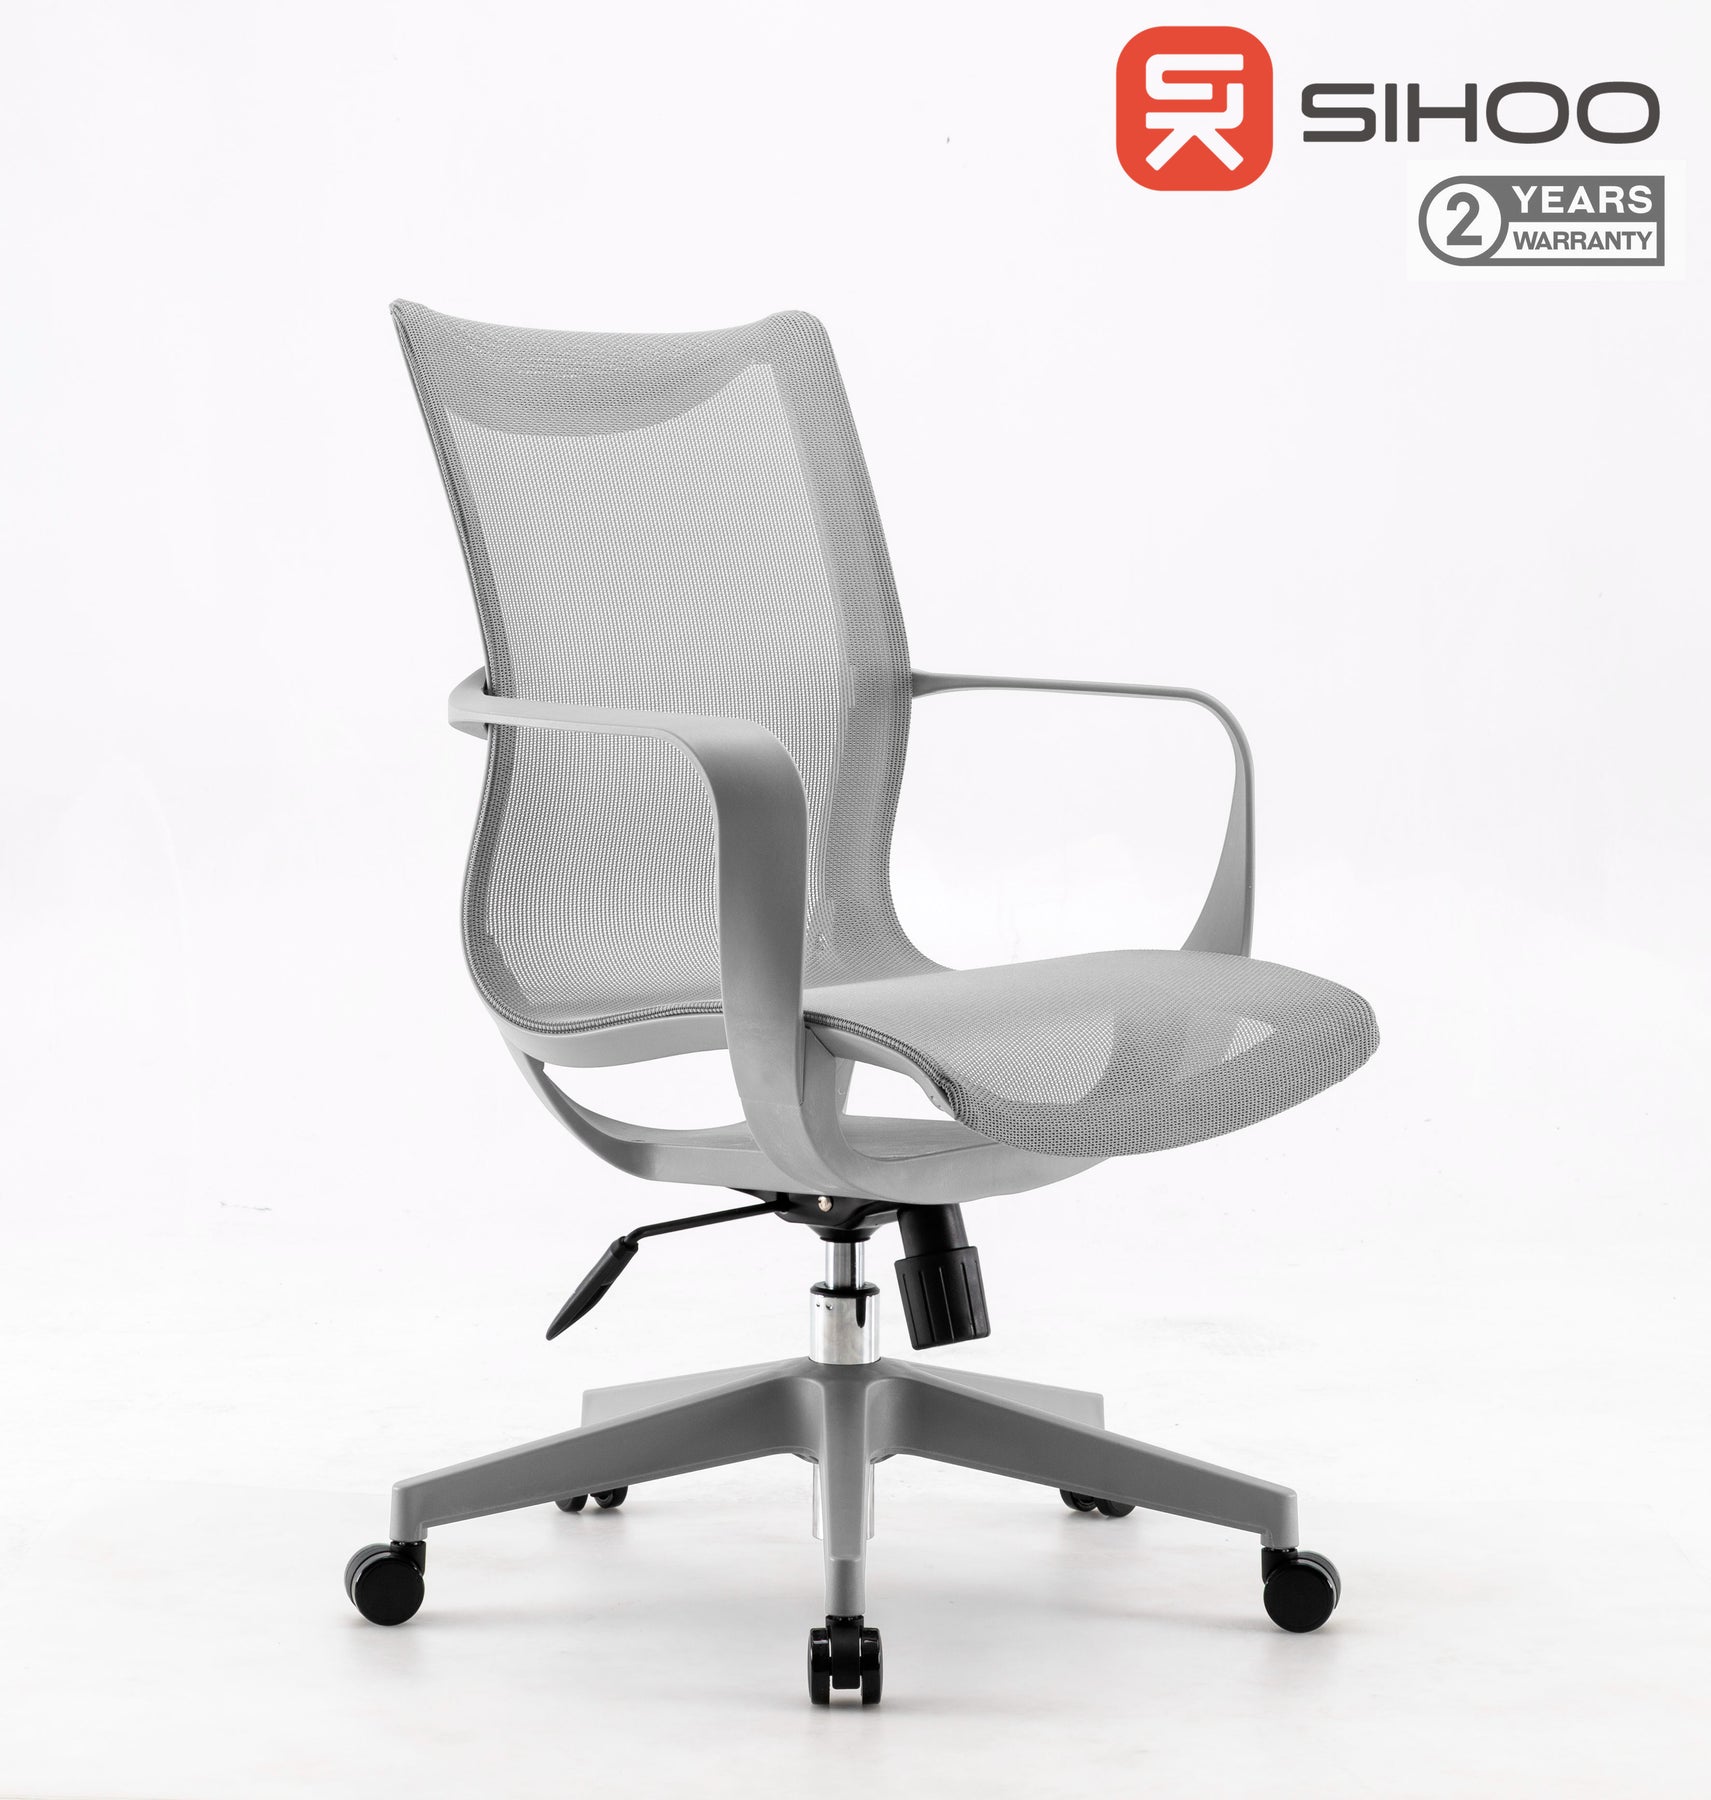 File:Sihoo M57 mesh office chair 01.jpg - Wikimedia Commons